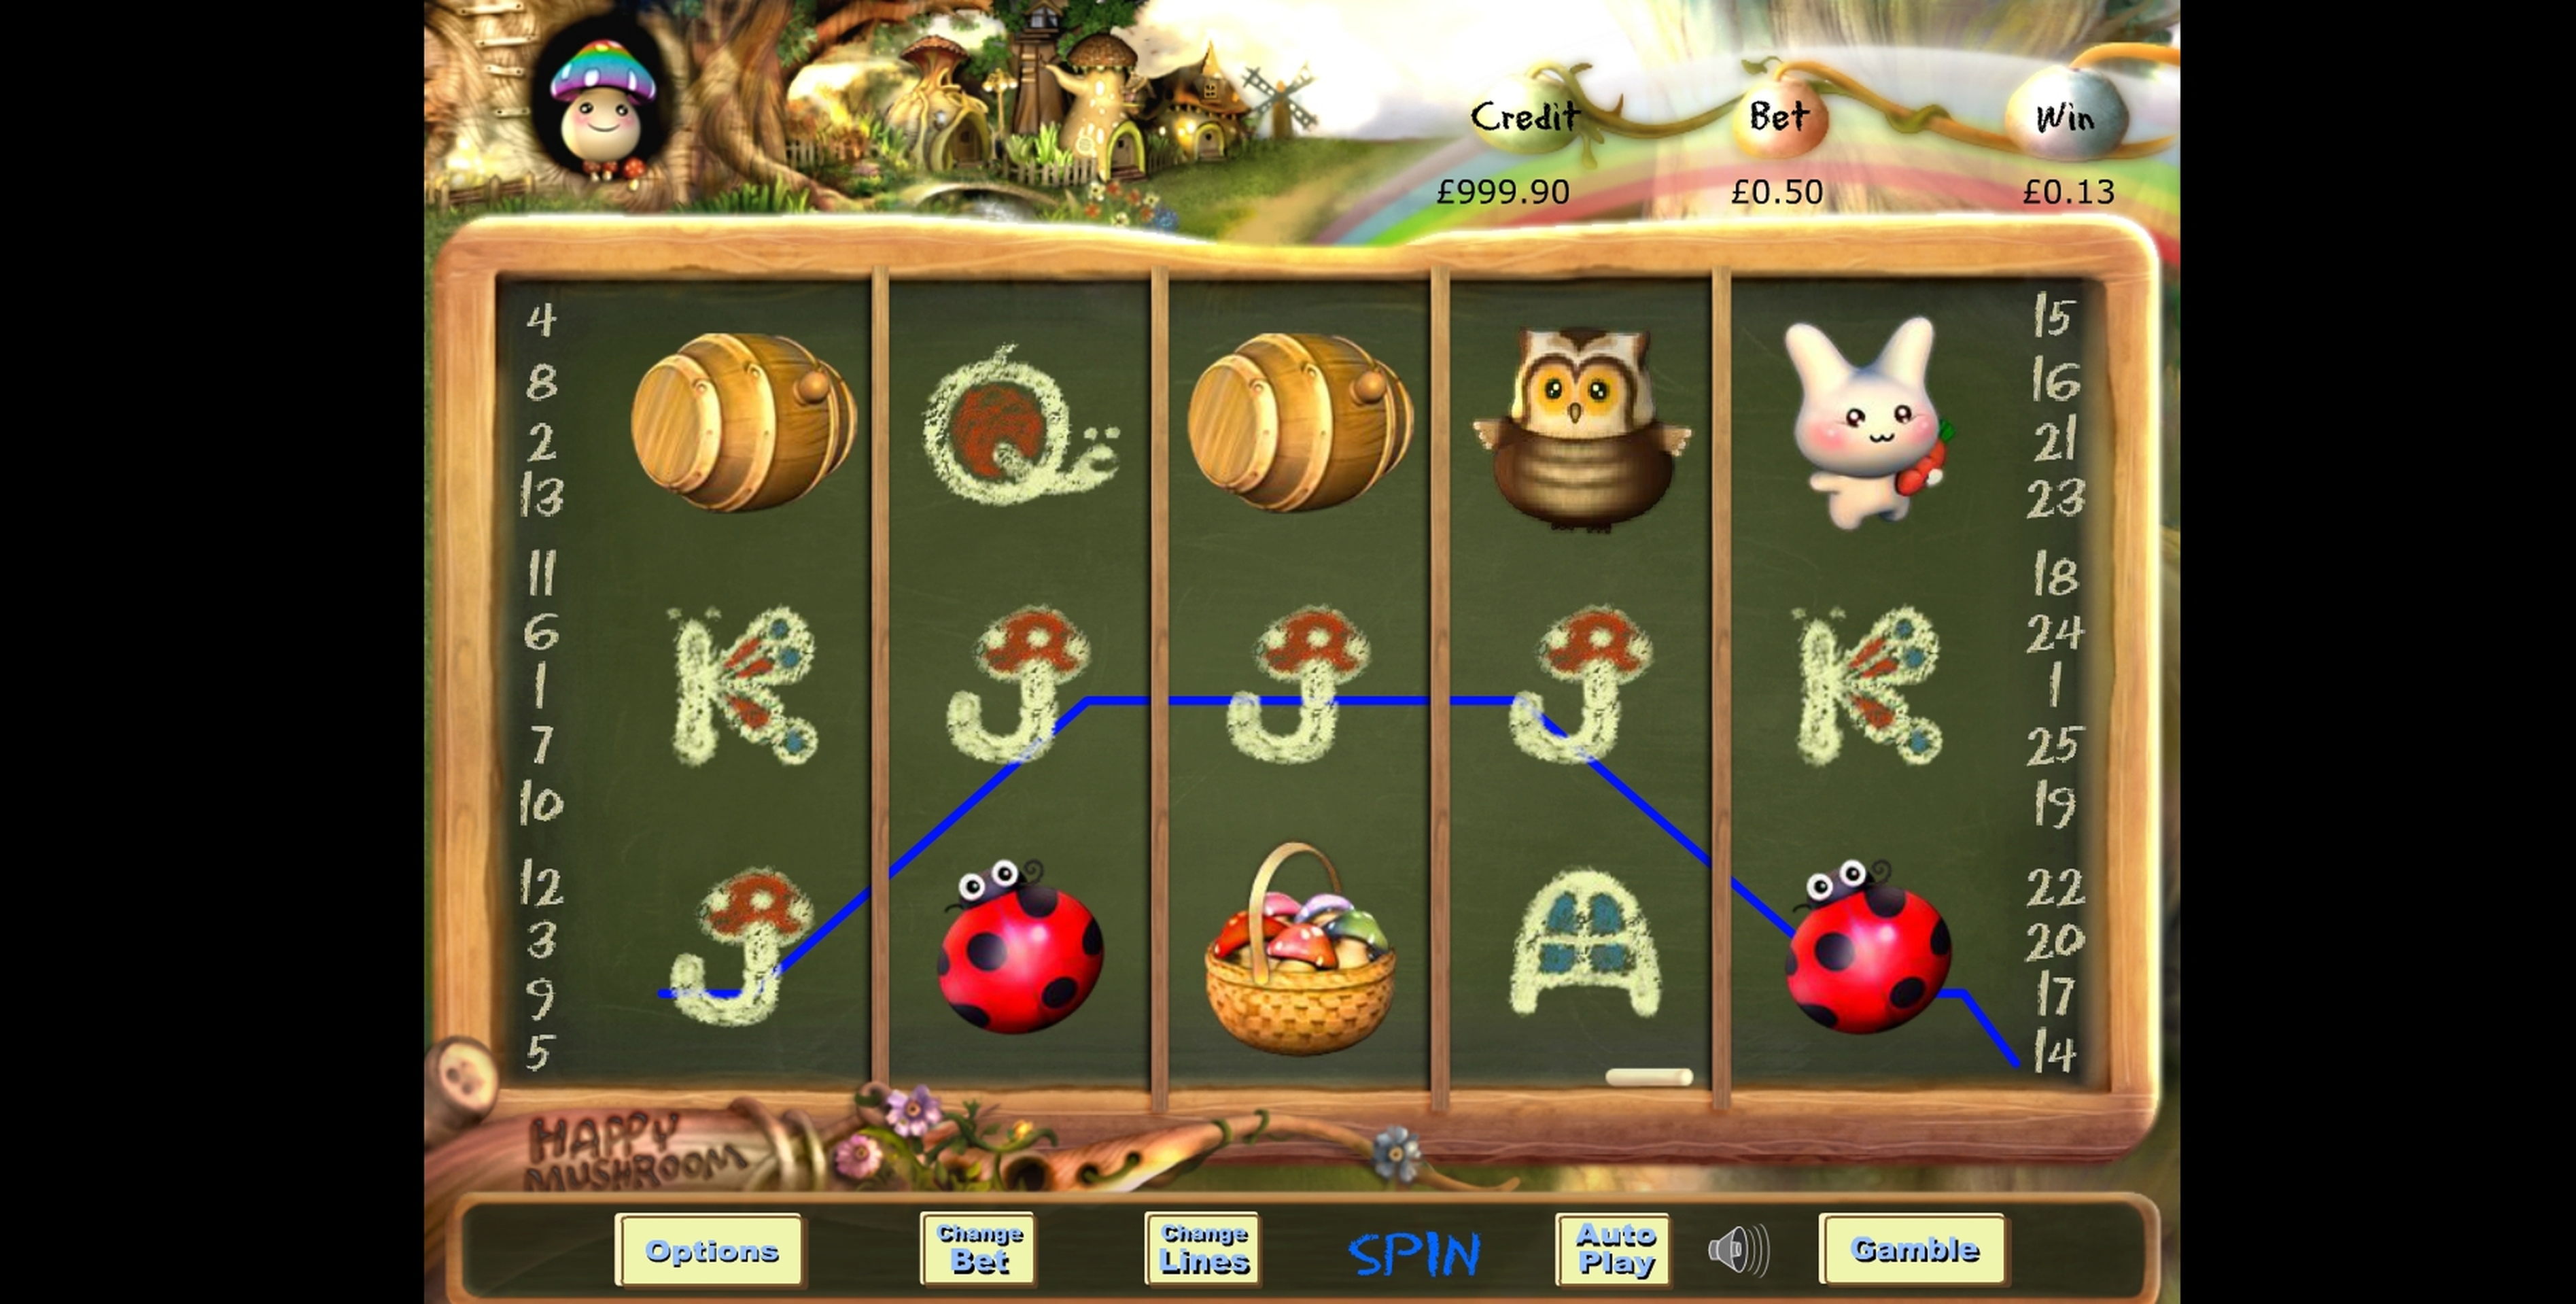 Win Money in Happy Mushroom Free Slot Game by EYECON